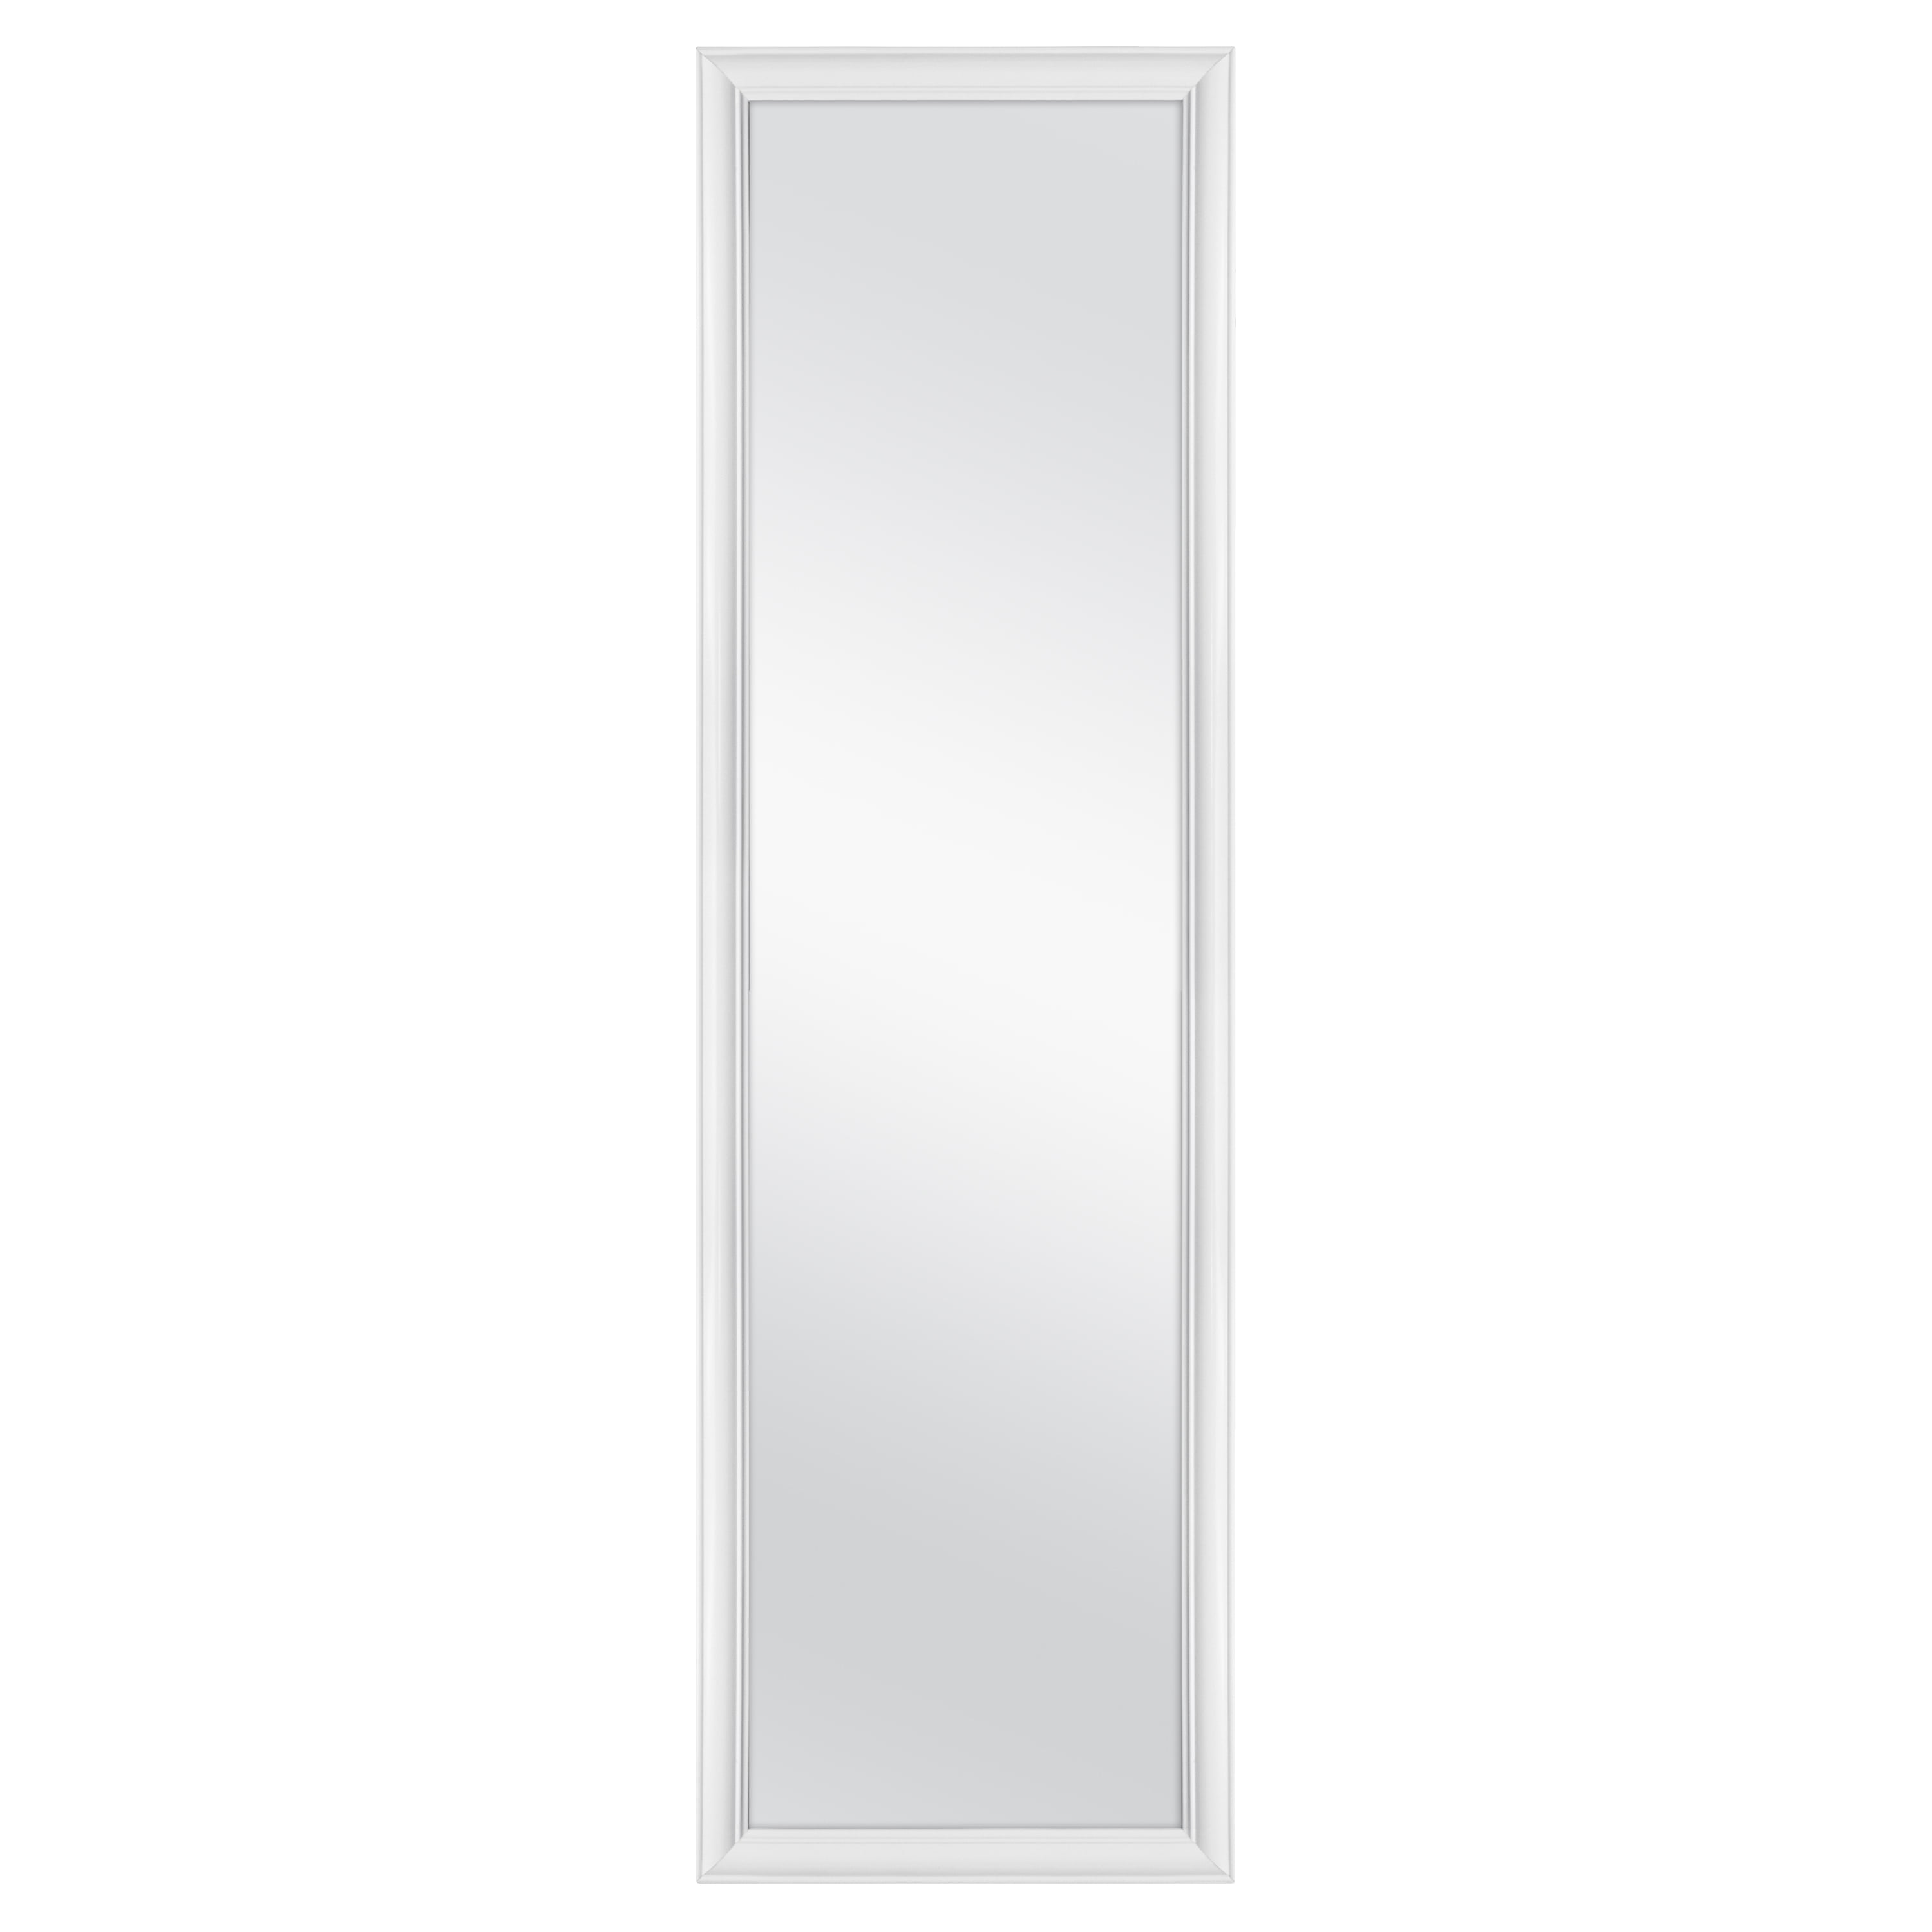 Mainstays 15" x 51" Over-the-Door Mirror, White